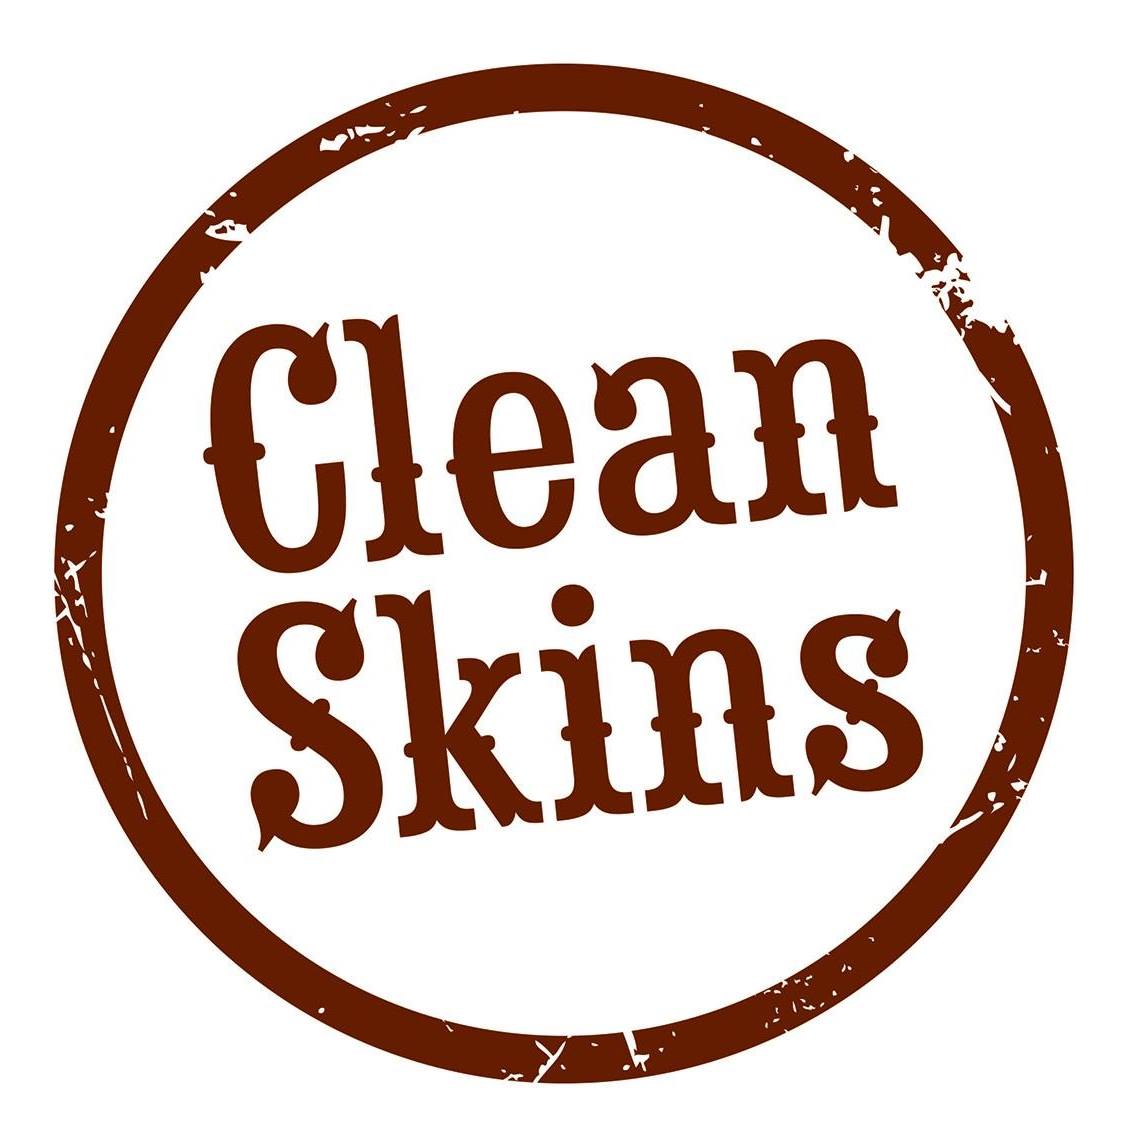 Cleanskins